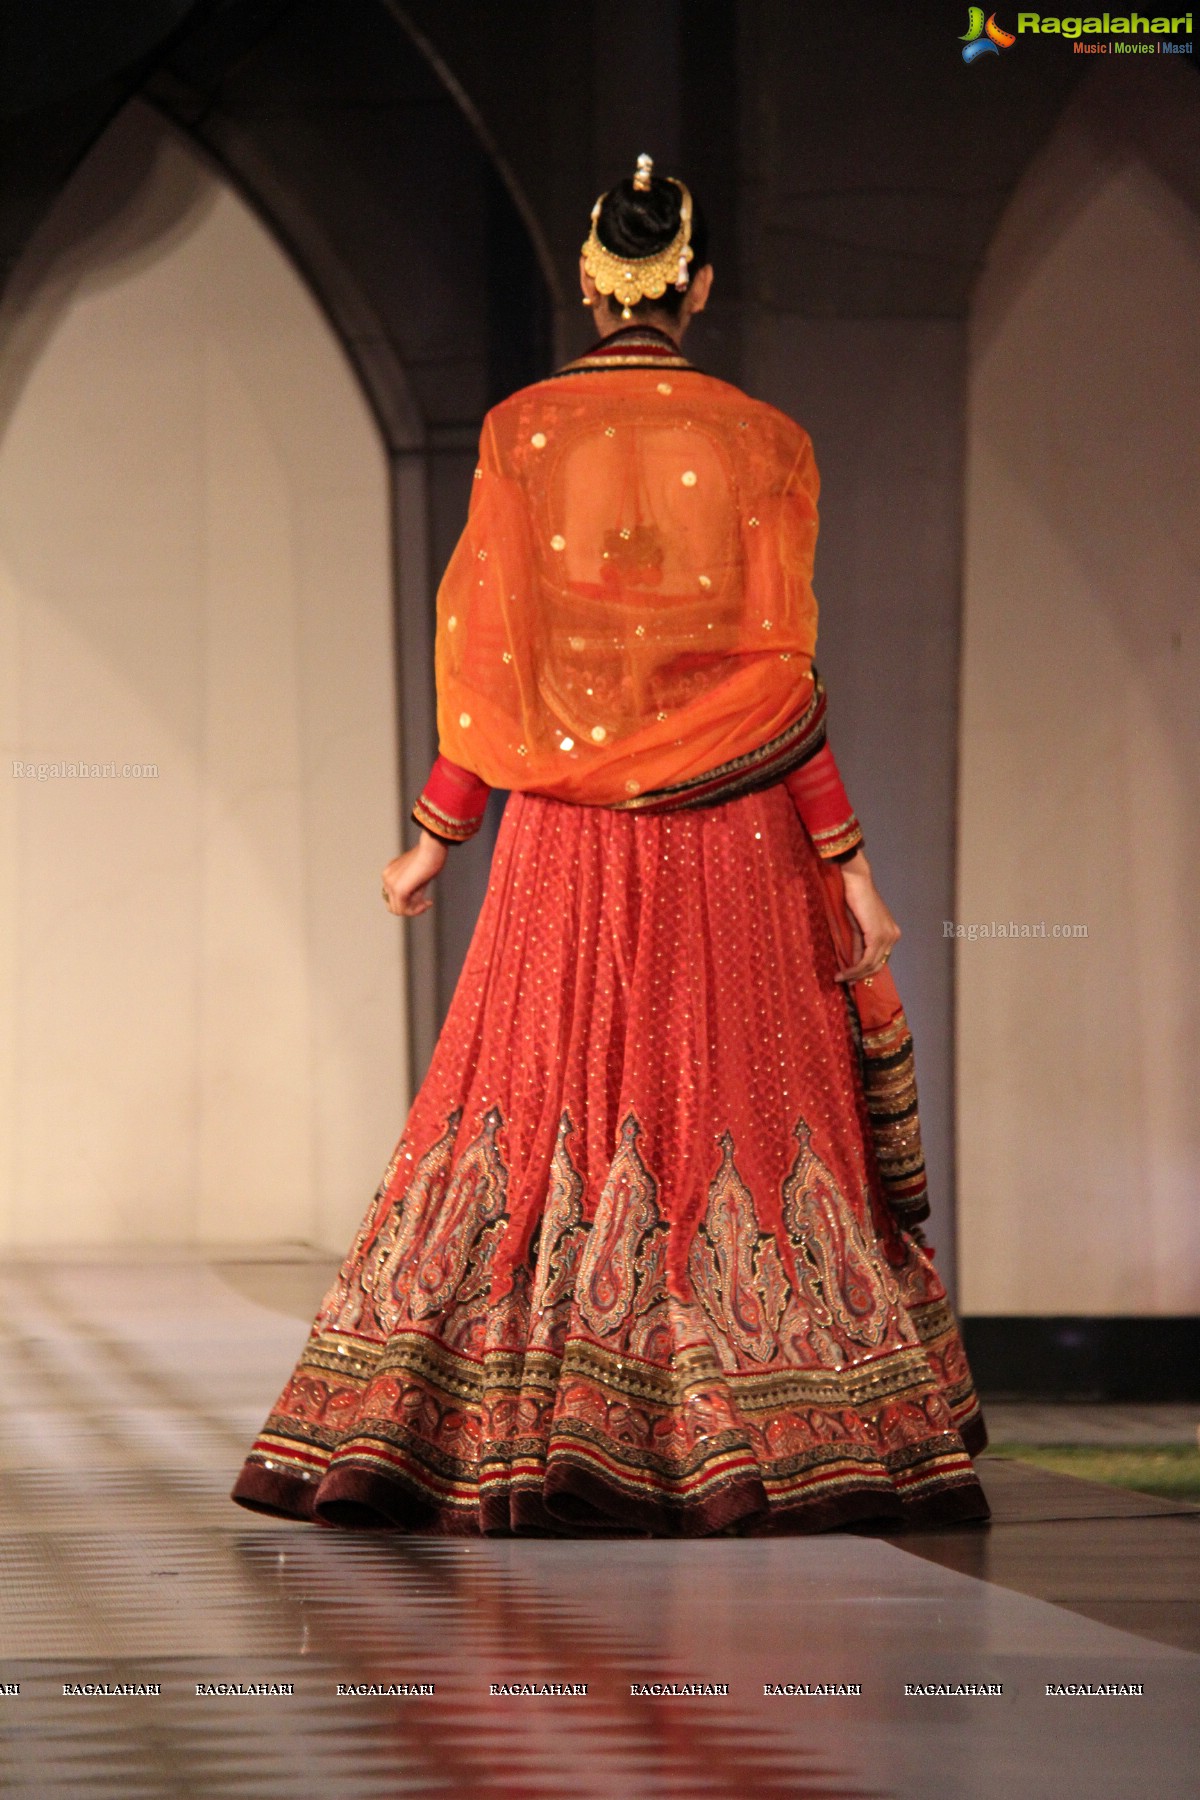 Tarun Tahiliani's Specially Curated Fashion Show 2015